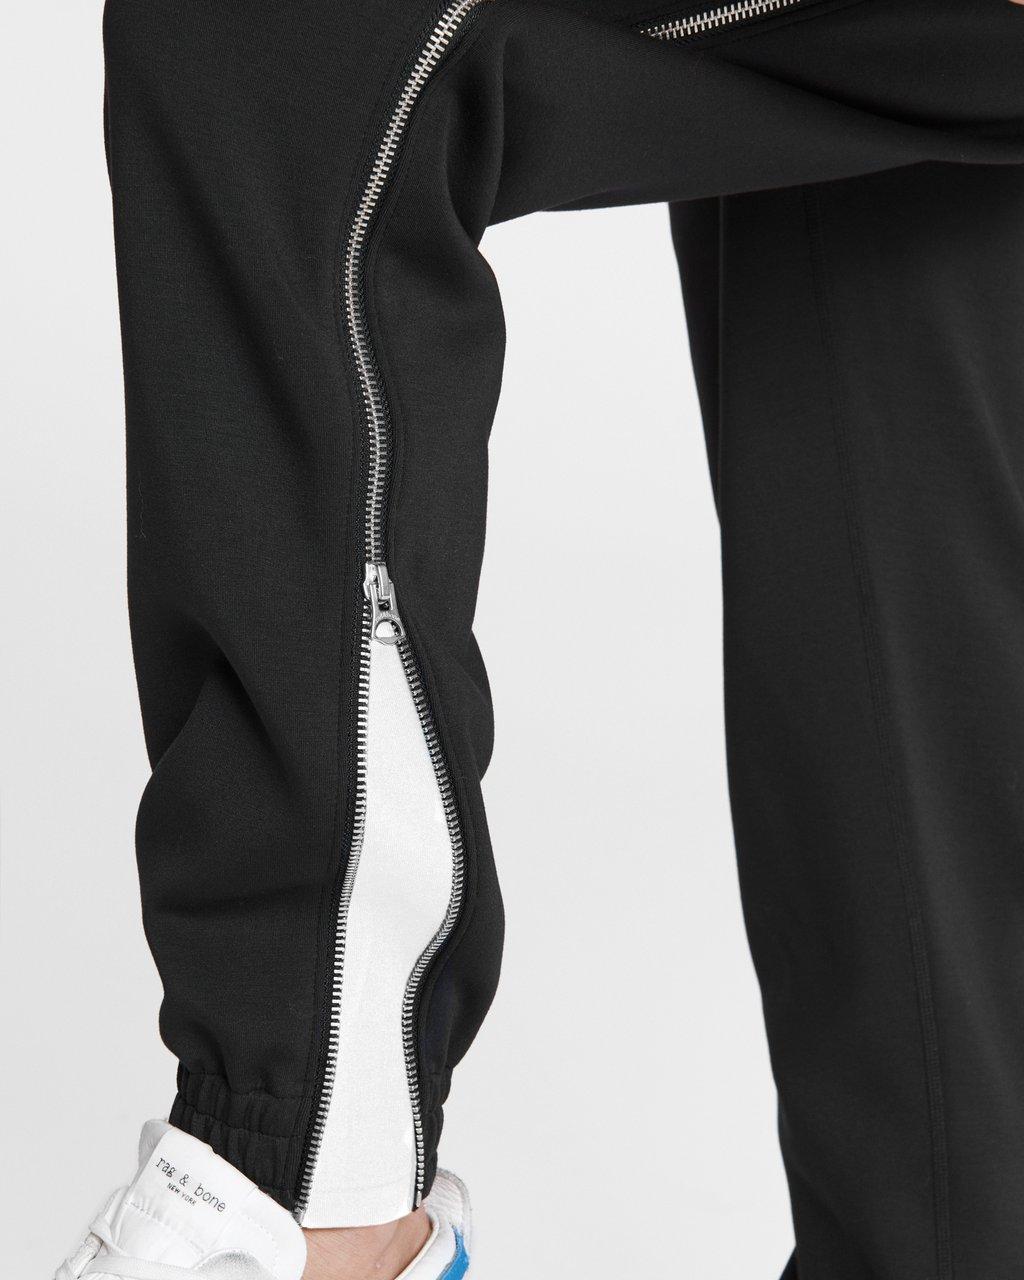 Modular Zip Sweatpants